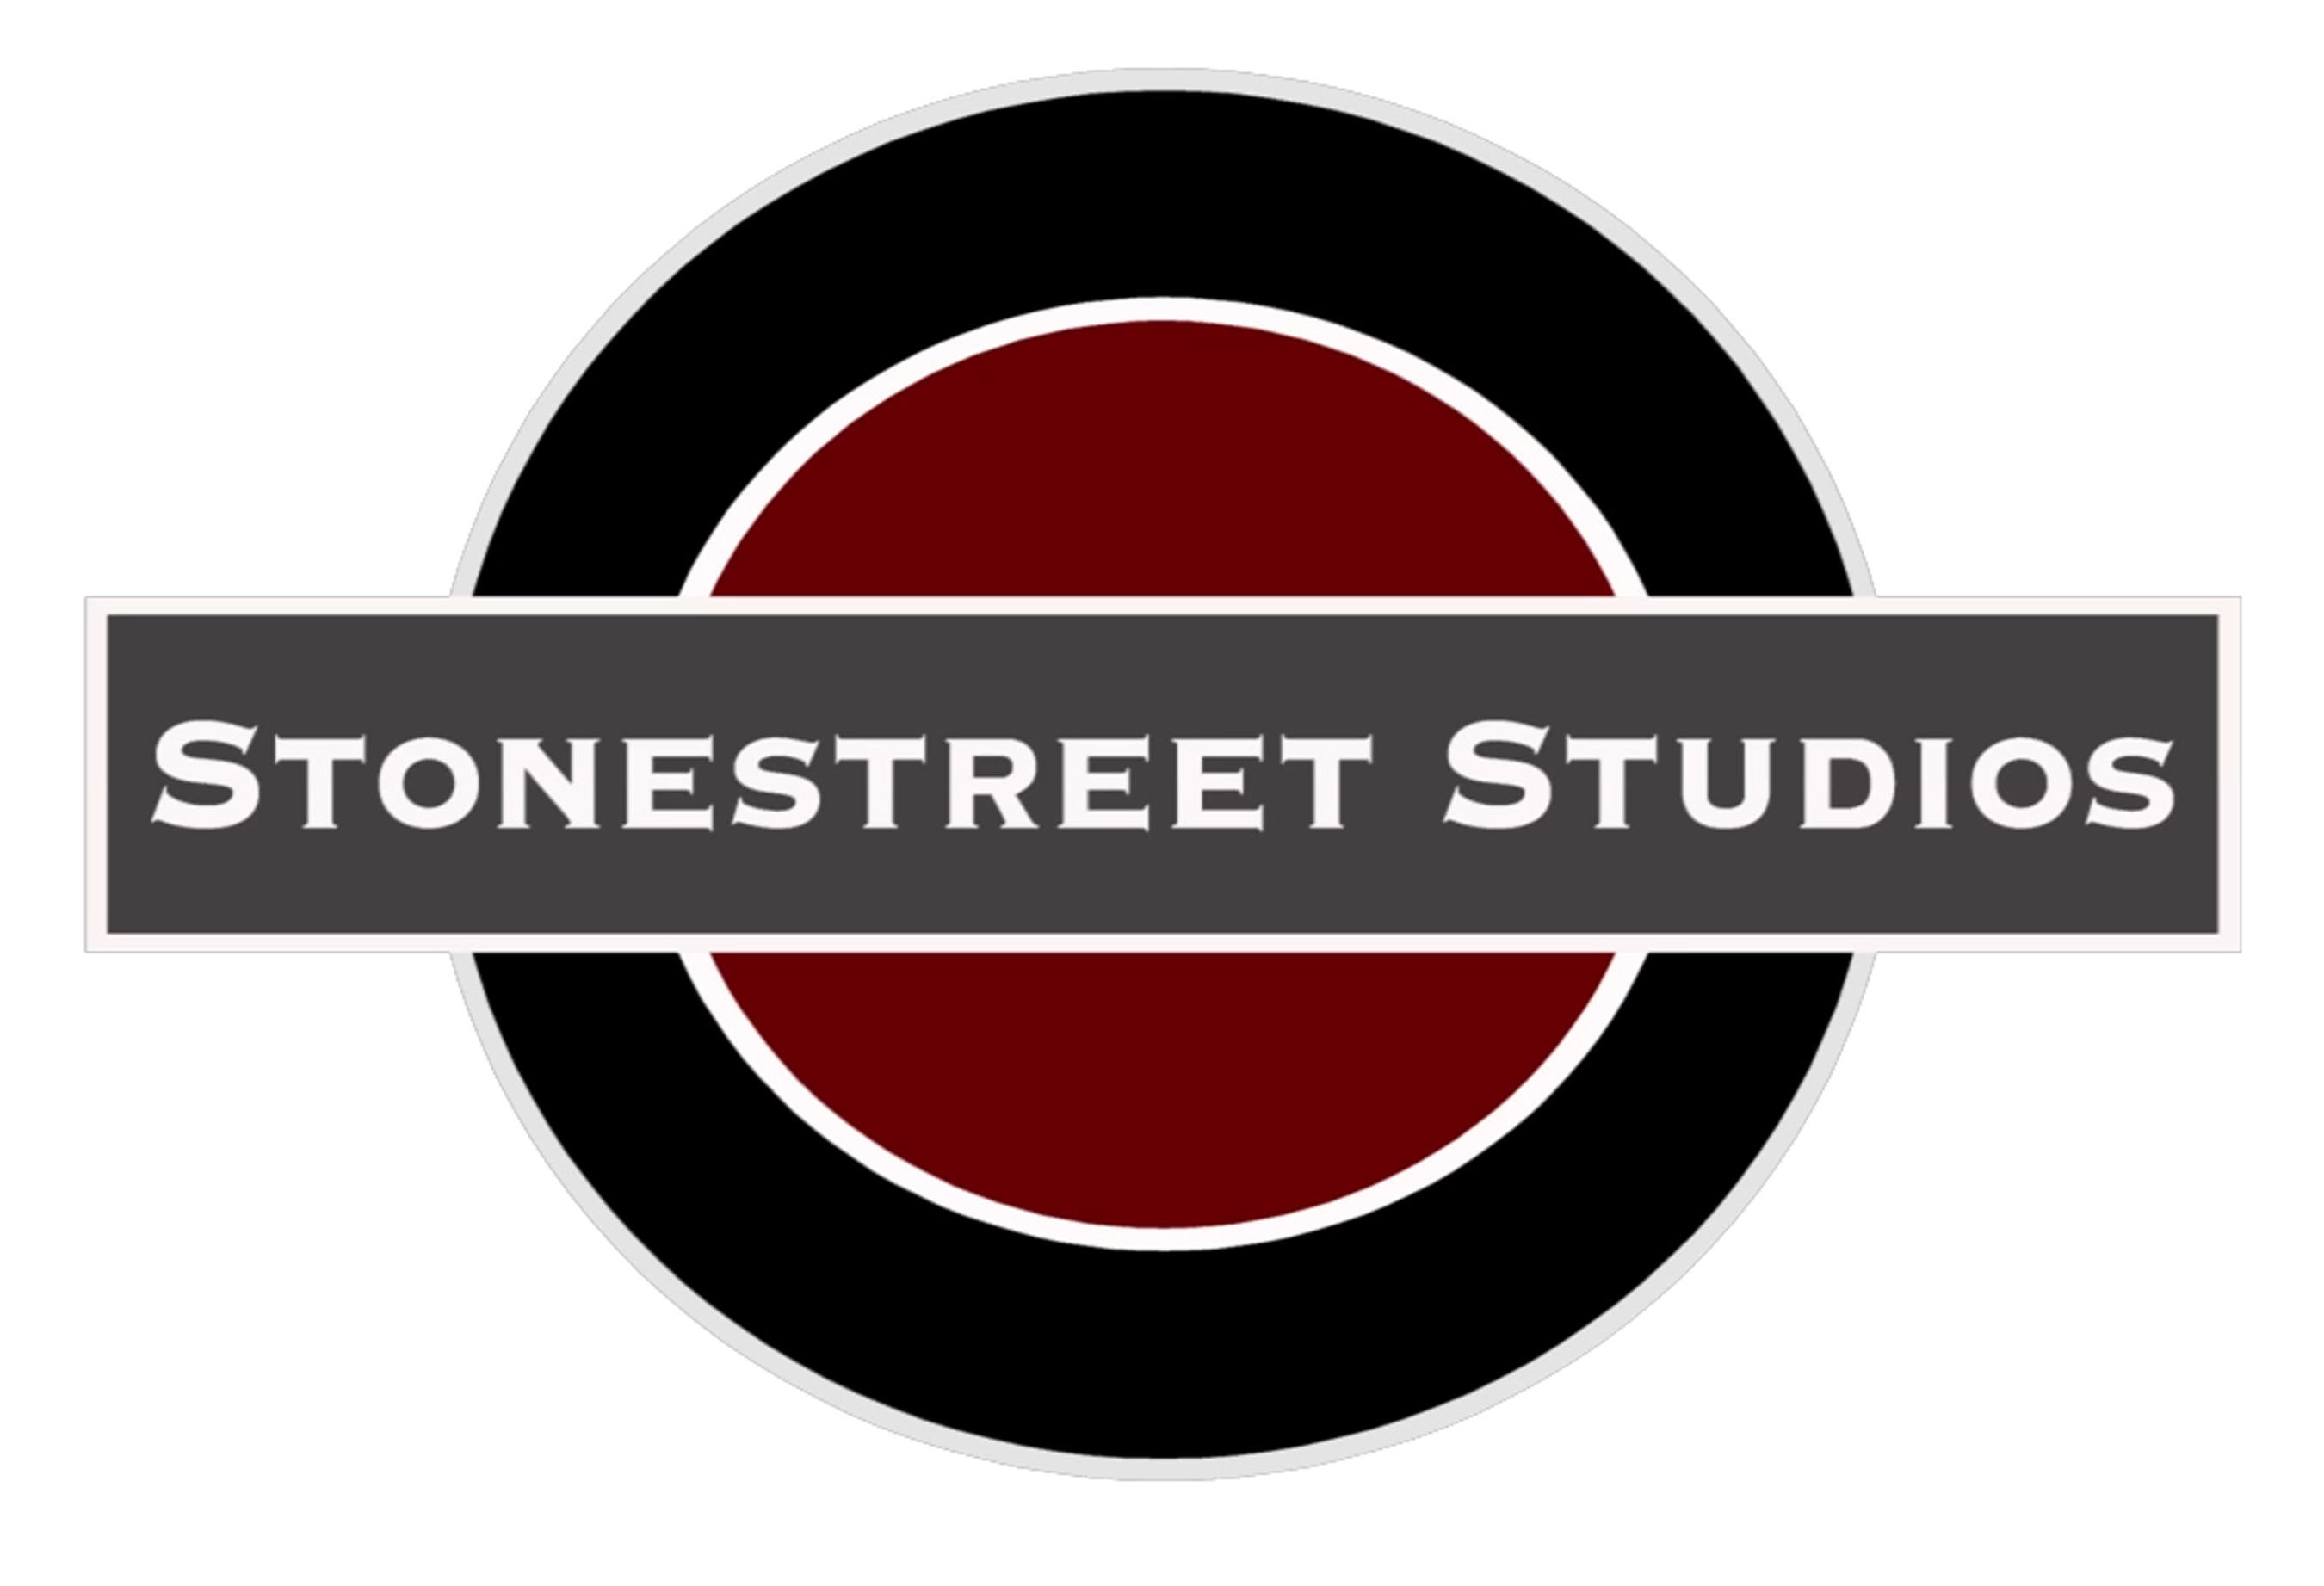 Stonestreet Studios